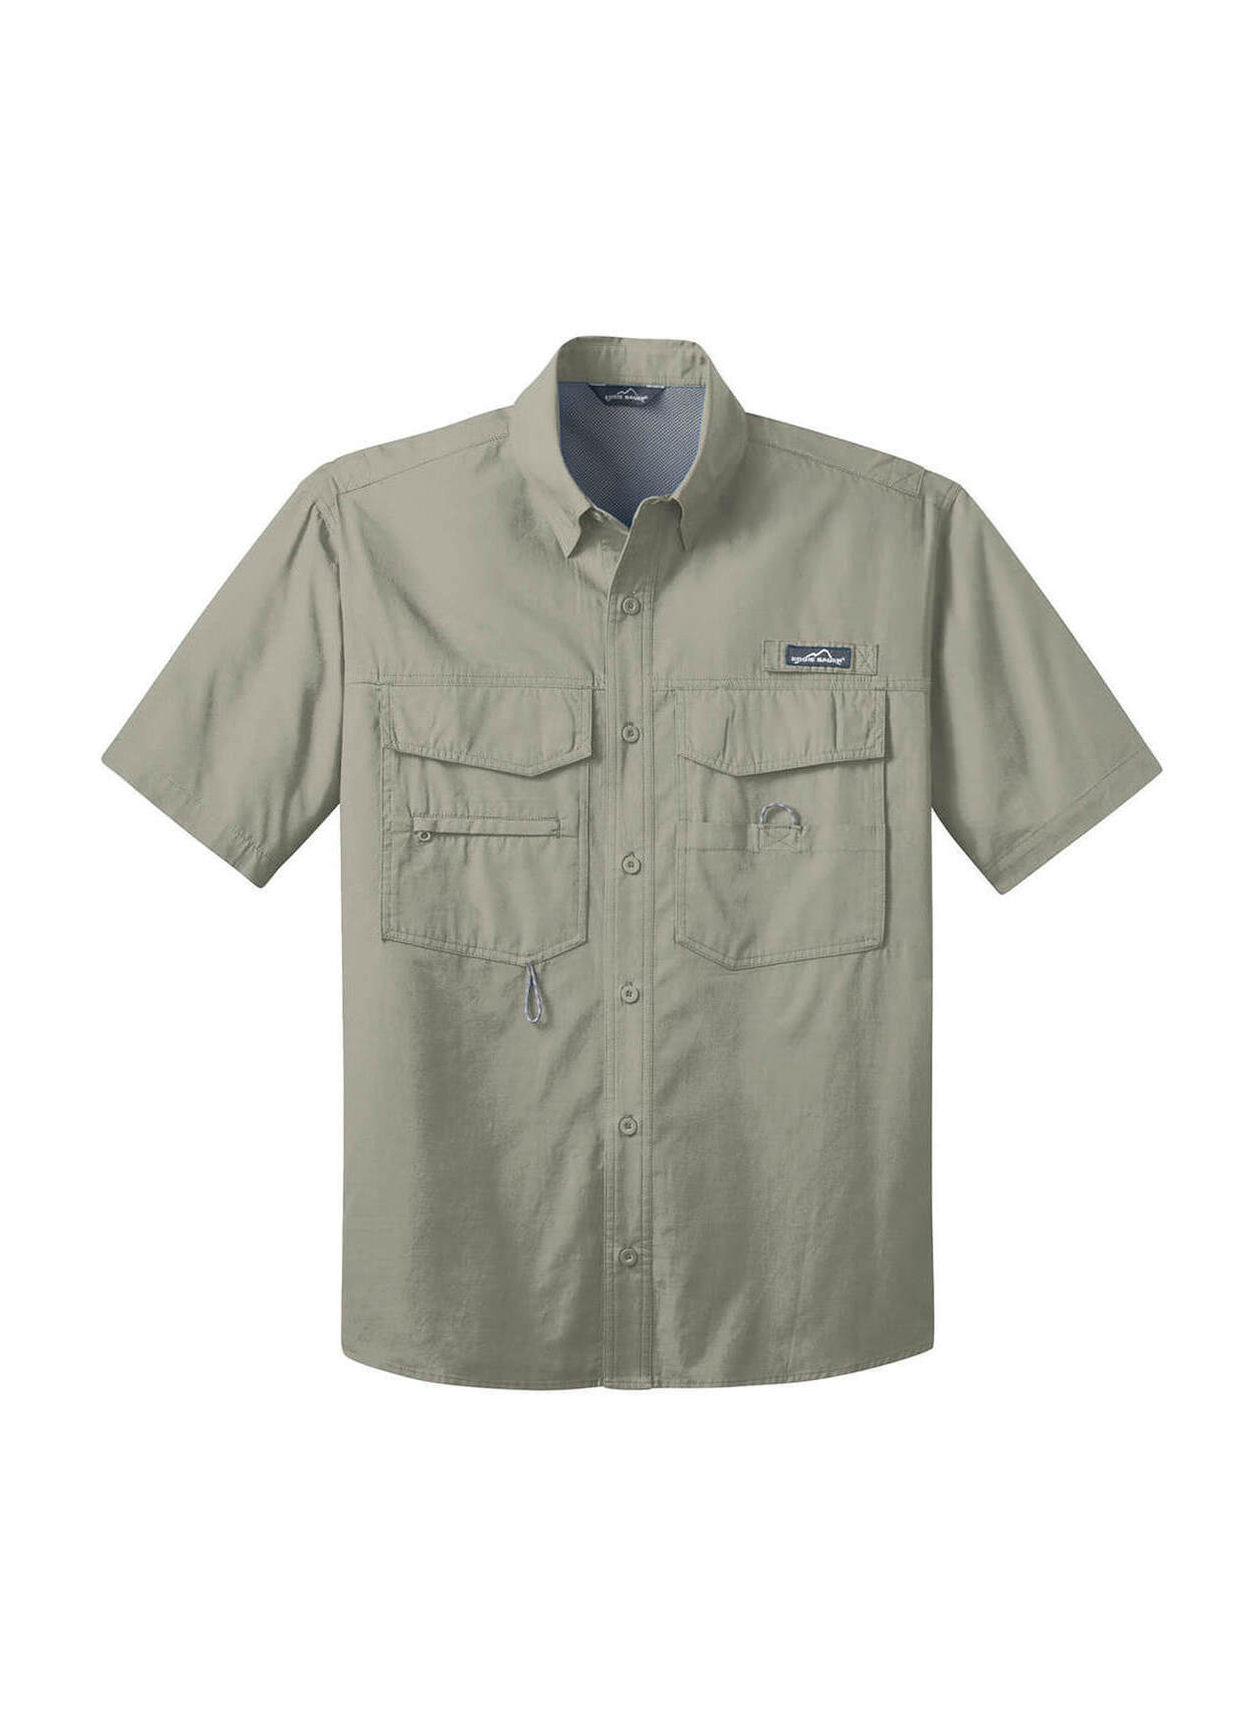 Eddie Bauer Men's Driftwood Short-Sleeve Fishing Shirt